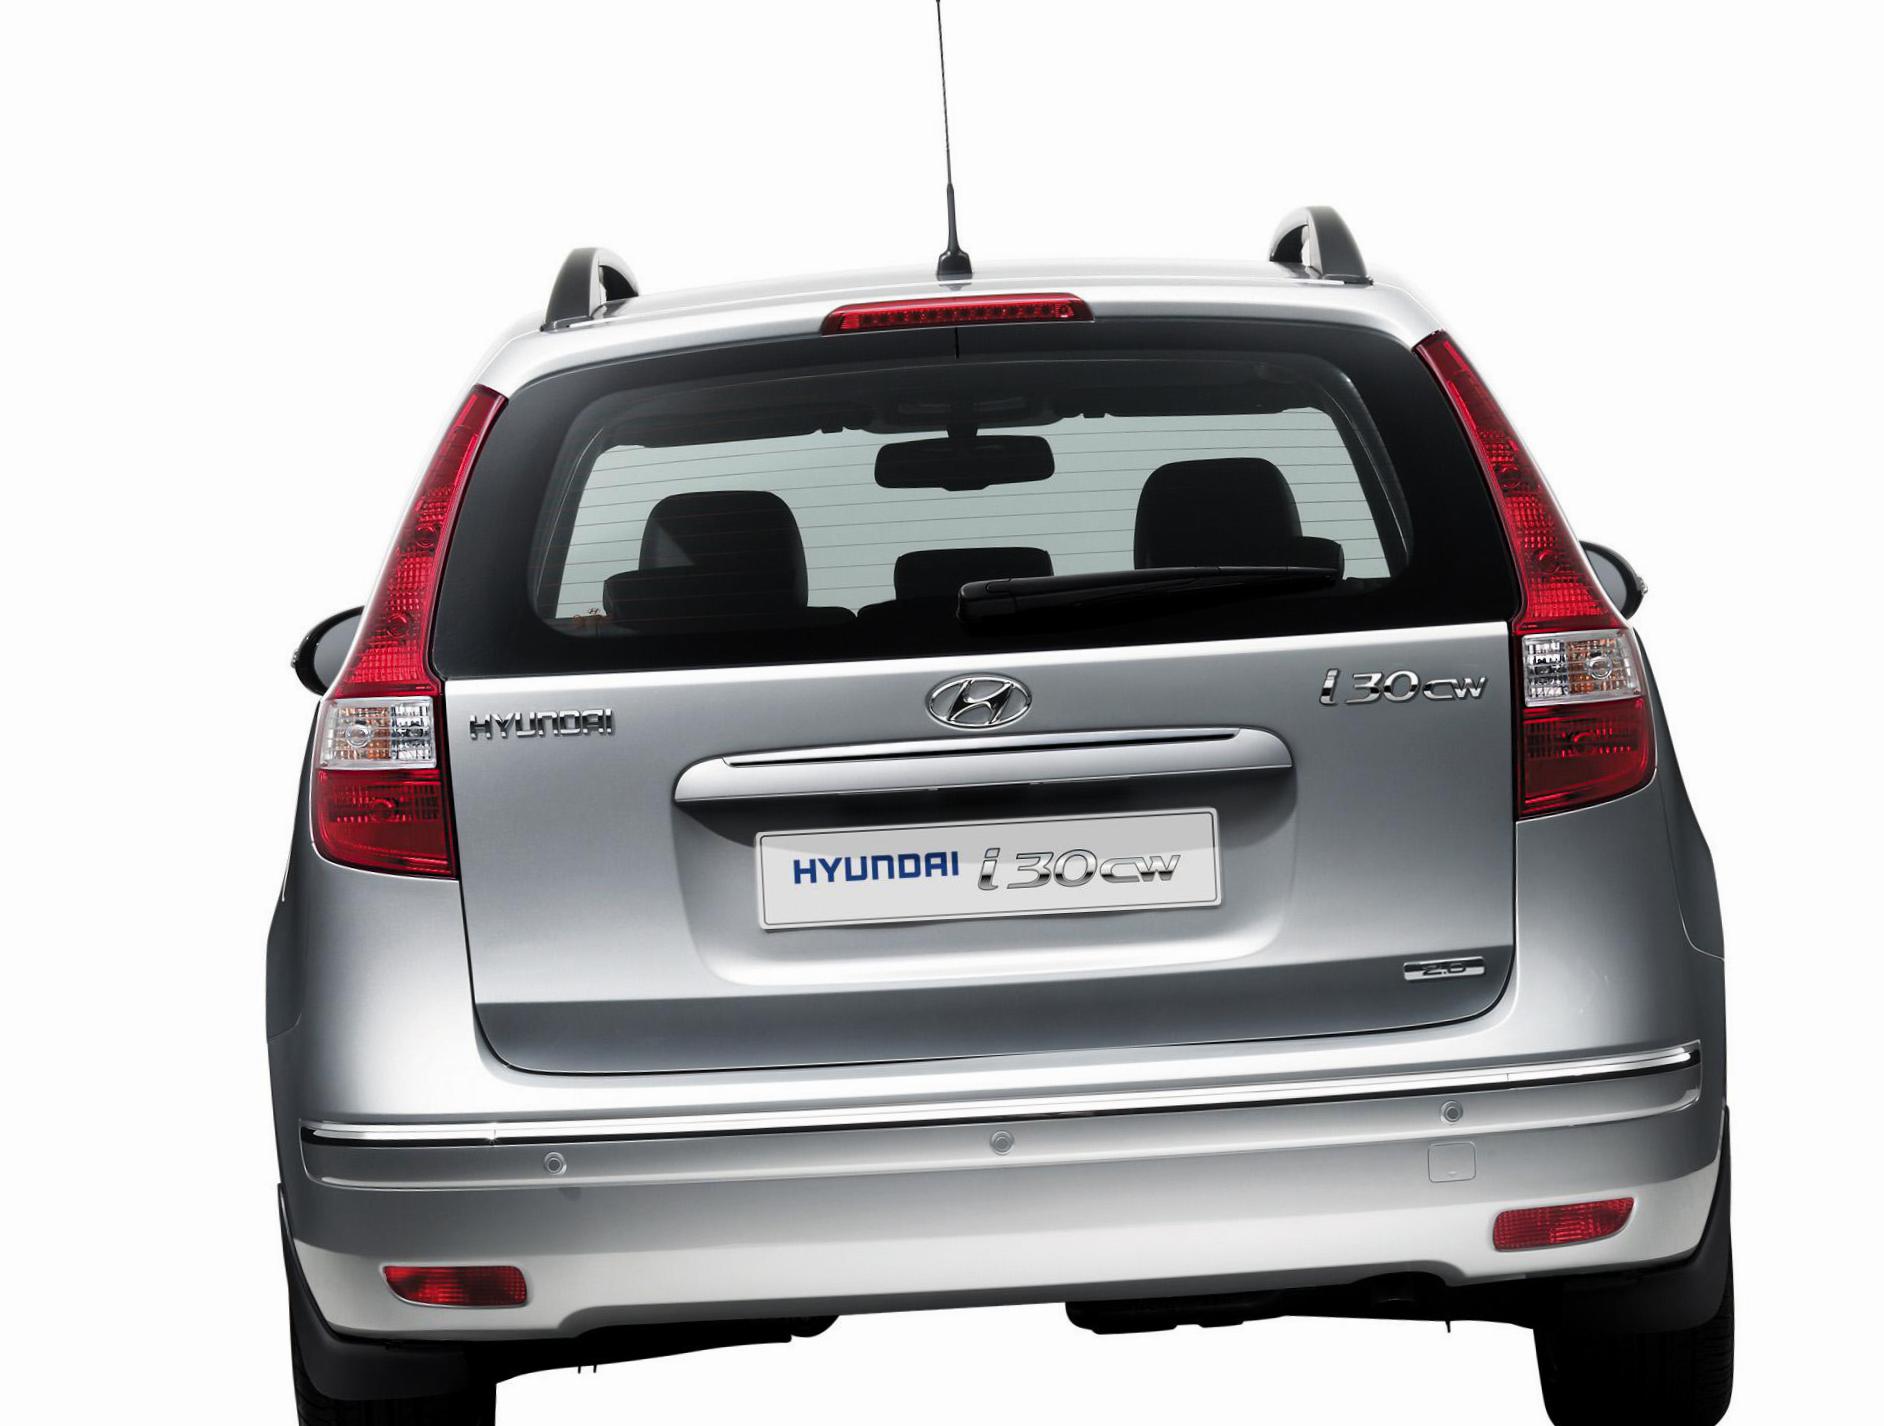 Hyundai i30cw prices 2014